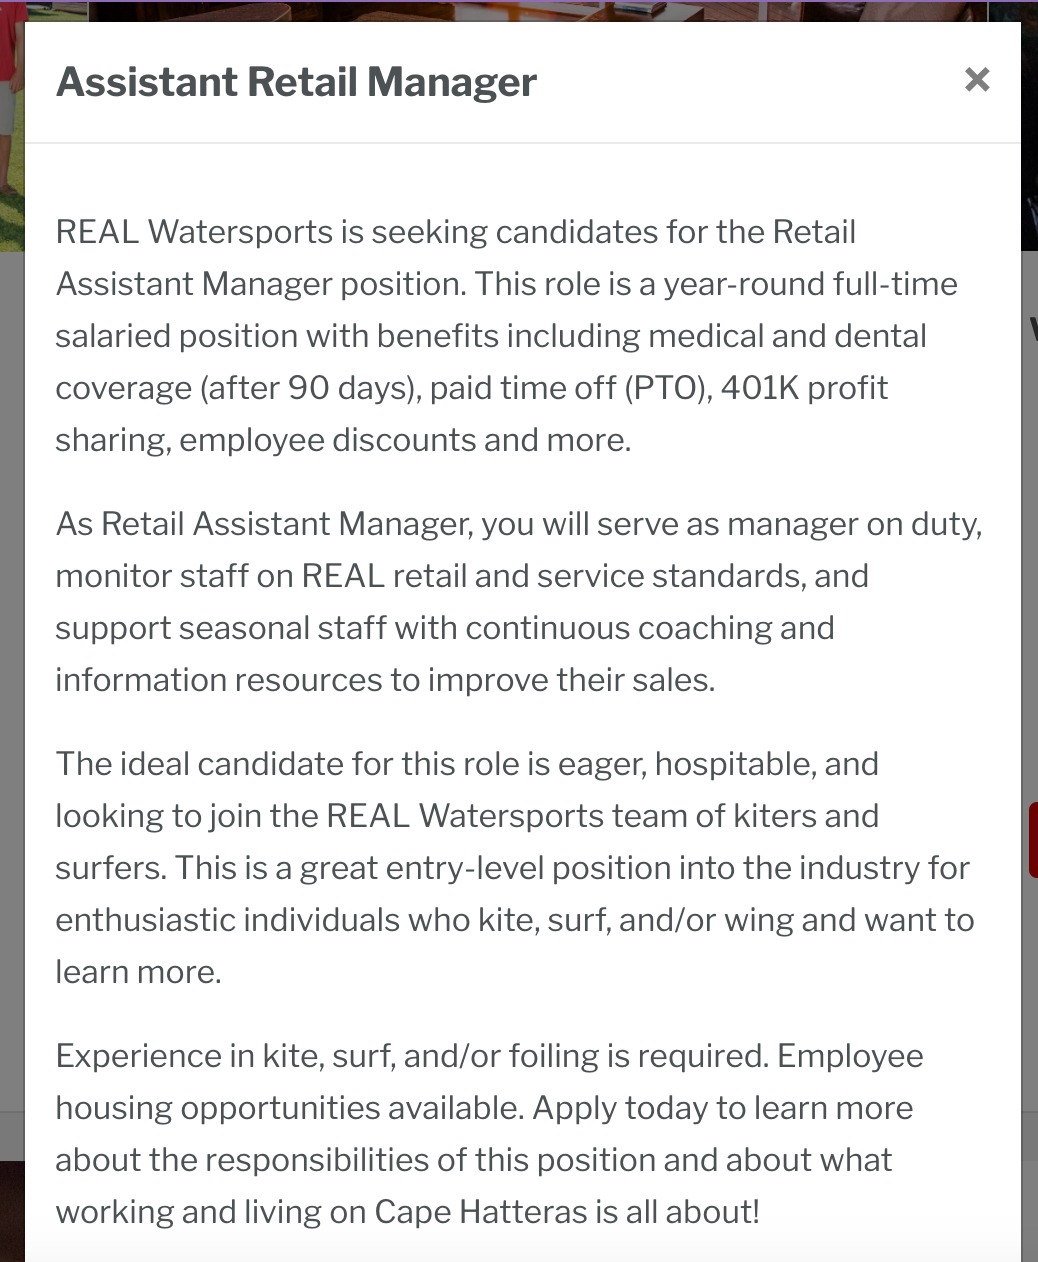 Screenshot of Saje Natural Wellness Team Leader job description